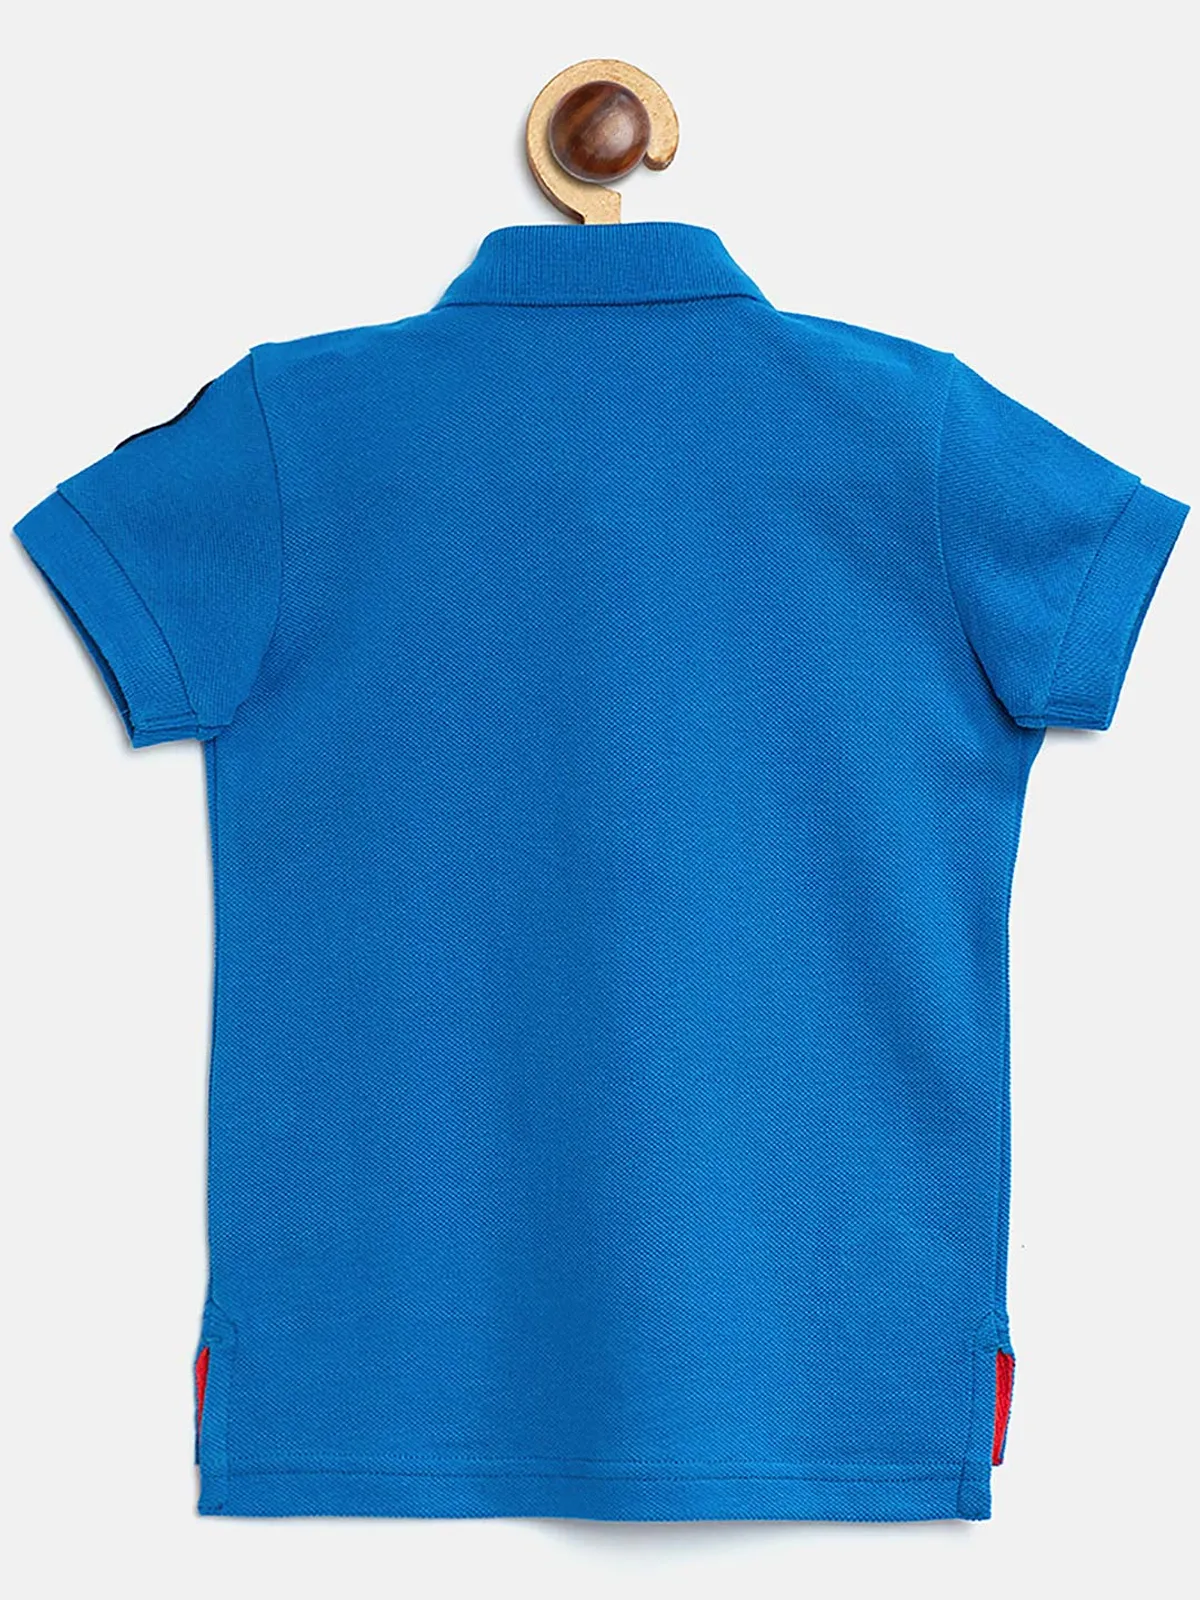 UCB solid royal blue casual t-shirt